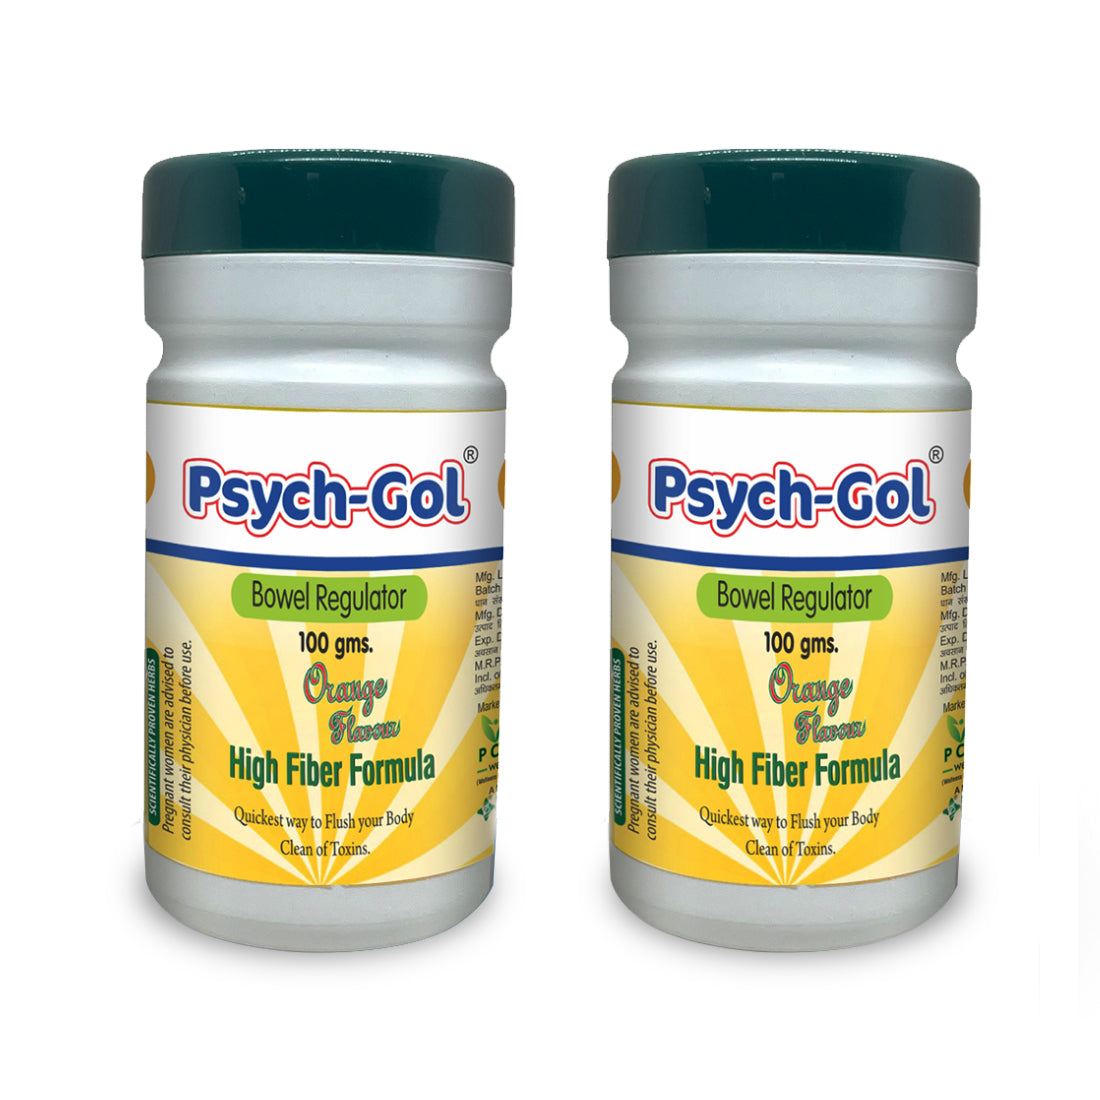 Psych-Gol Bowel Regulator-2 x 100gm  An Ayurvedic formula for Healthy Digestion- Relieves Constipation, Gas & Acidity